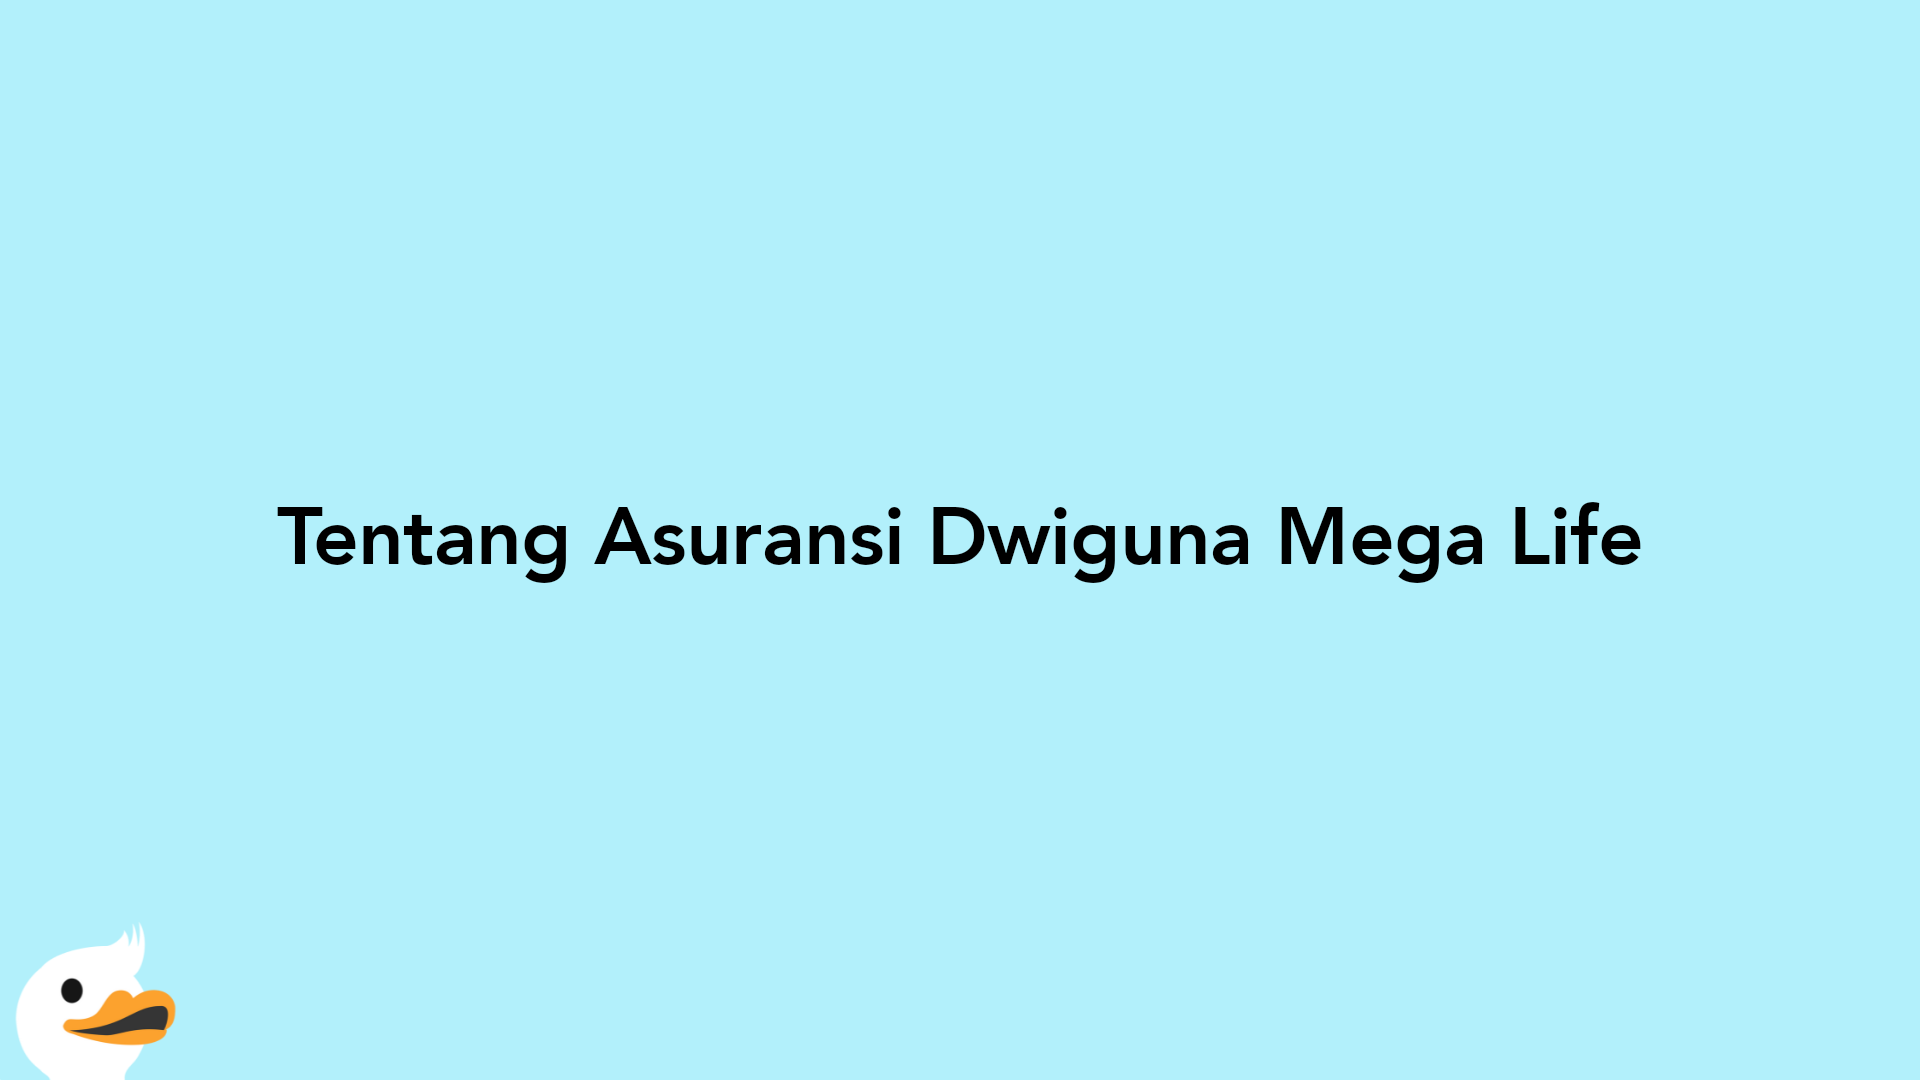 Tentang Asuransi Dwiguna Mega Life